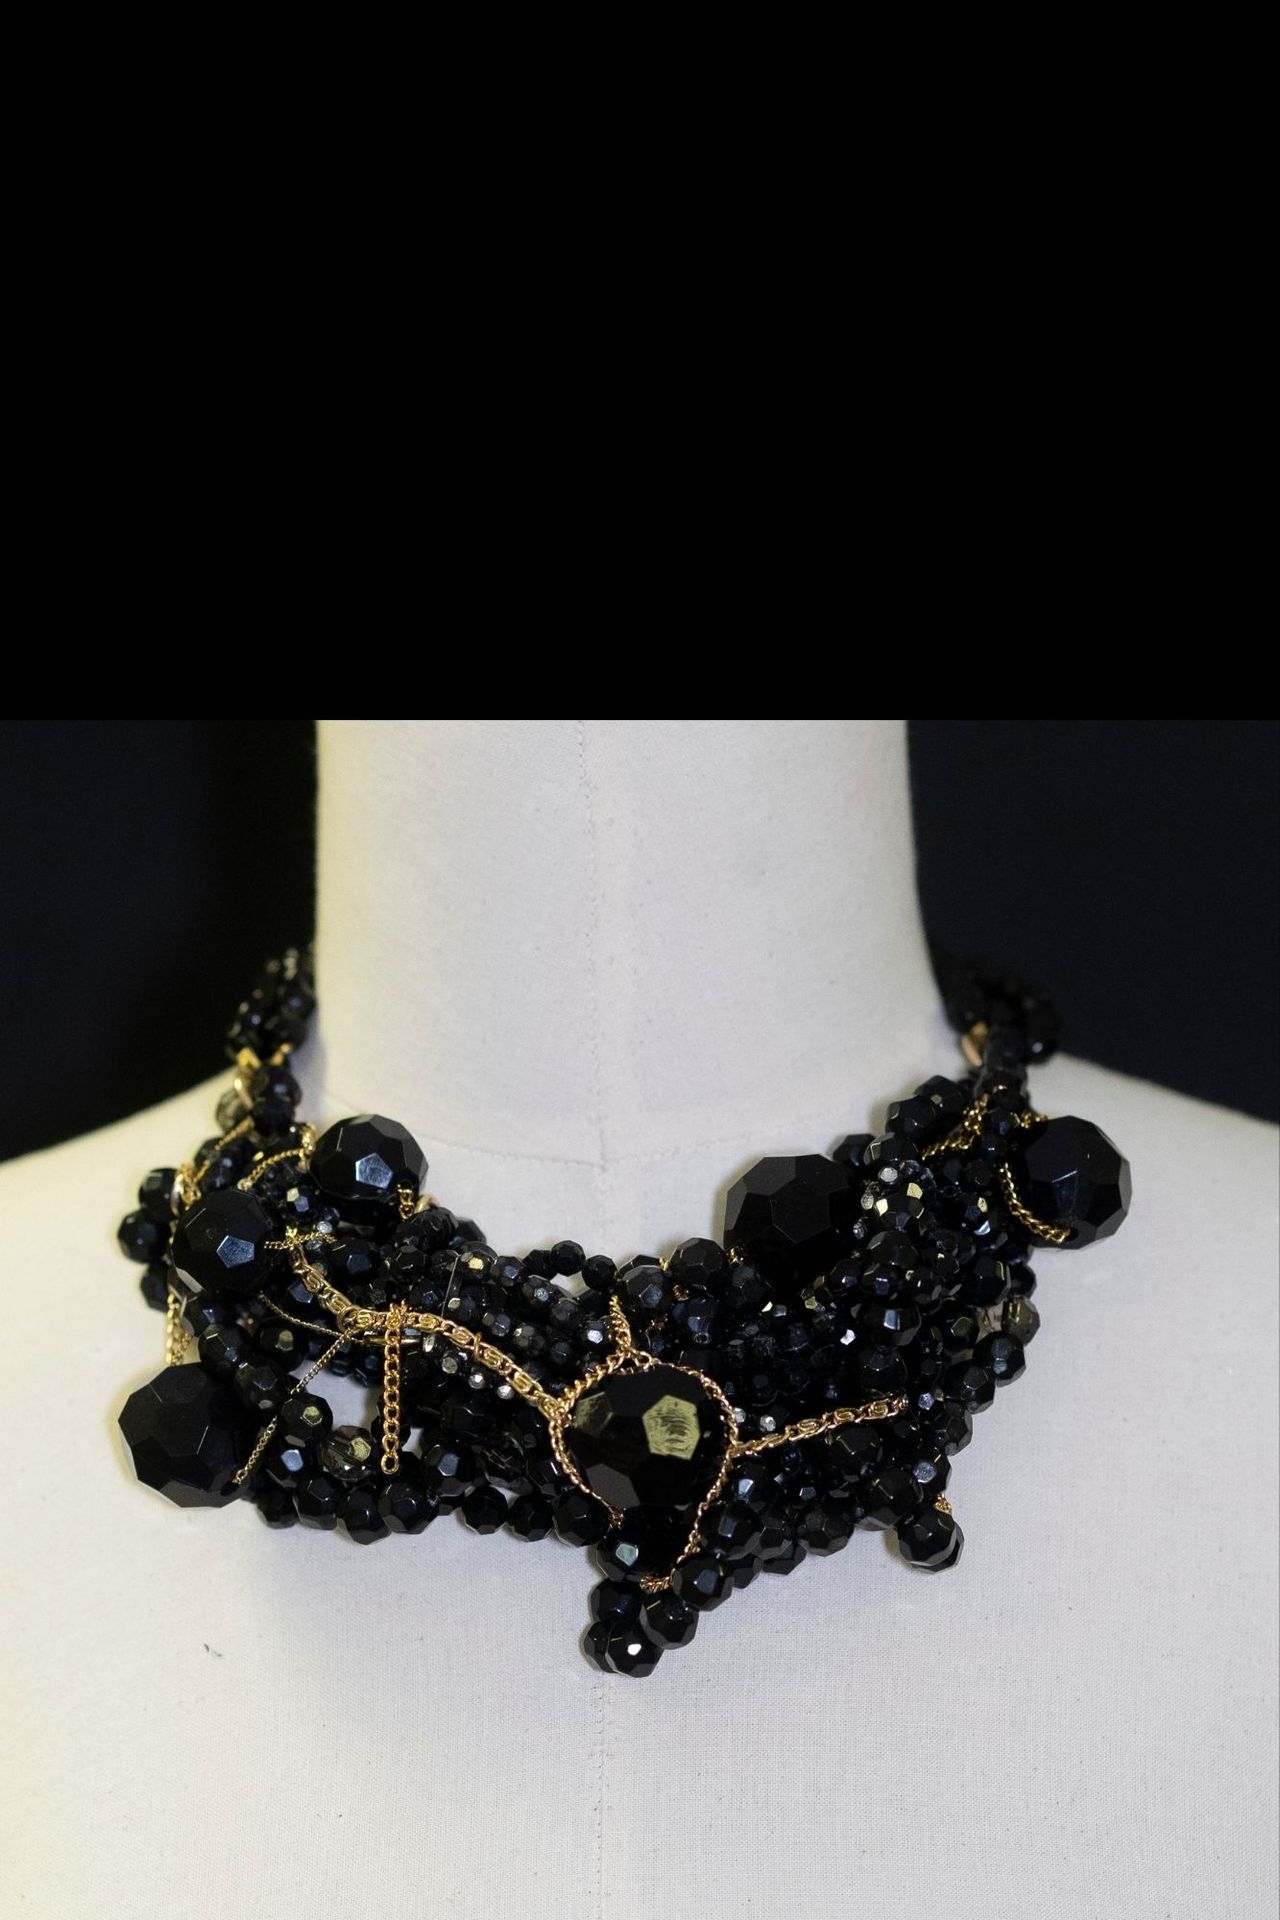 Marie MORATO 巴洛克之夜 "项链

黑色巴洛克珍珠吊坠，带金链。